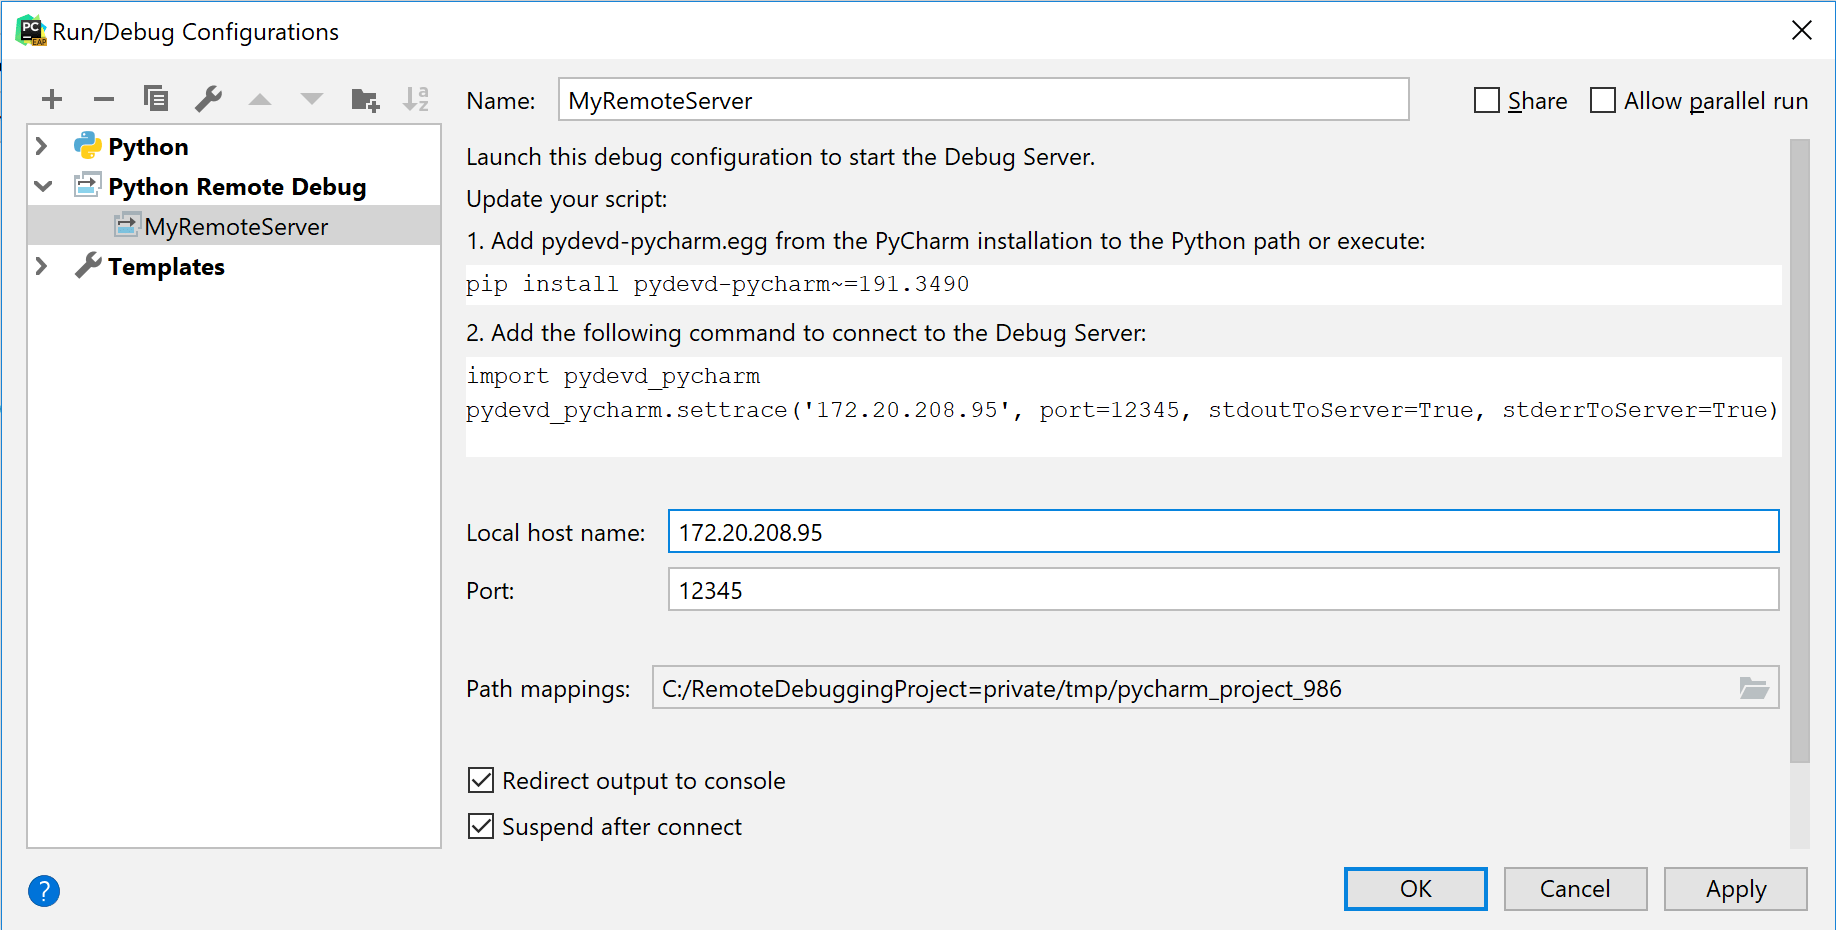 Adding a Python remote debug configuration